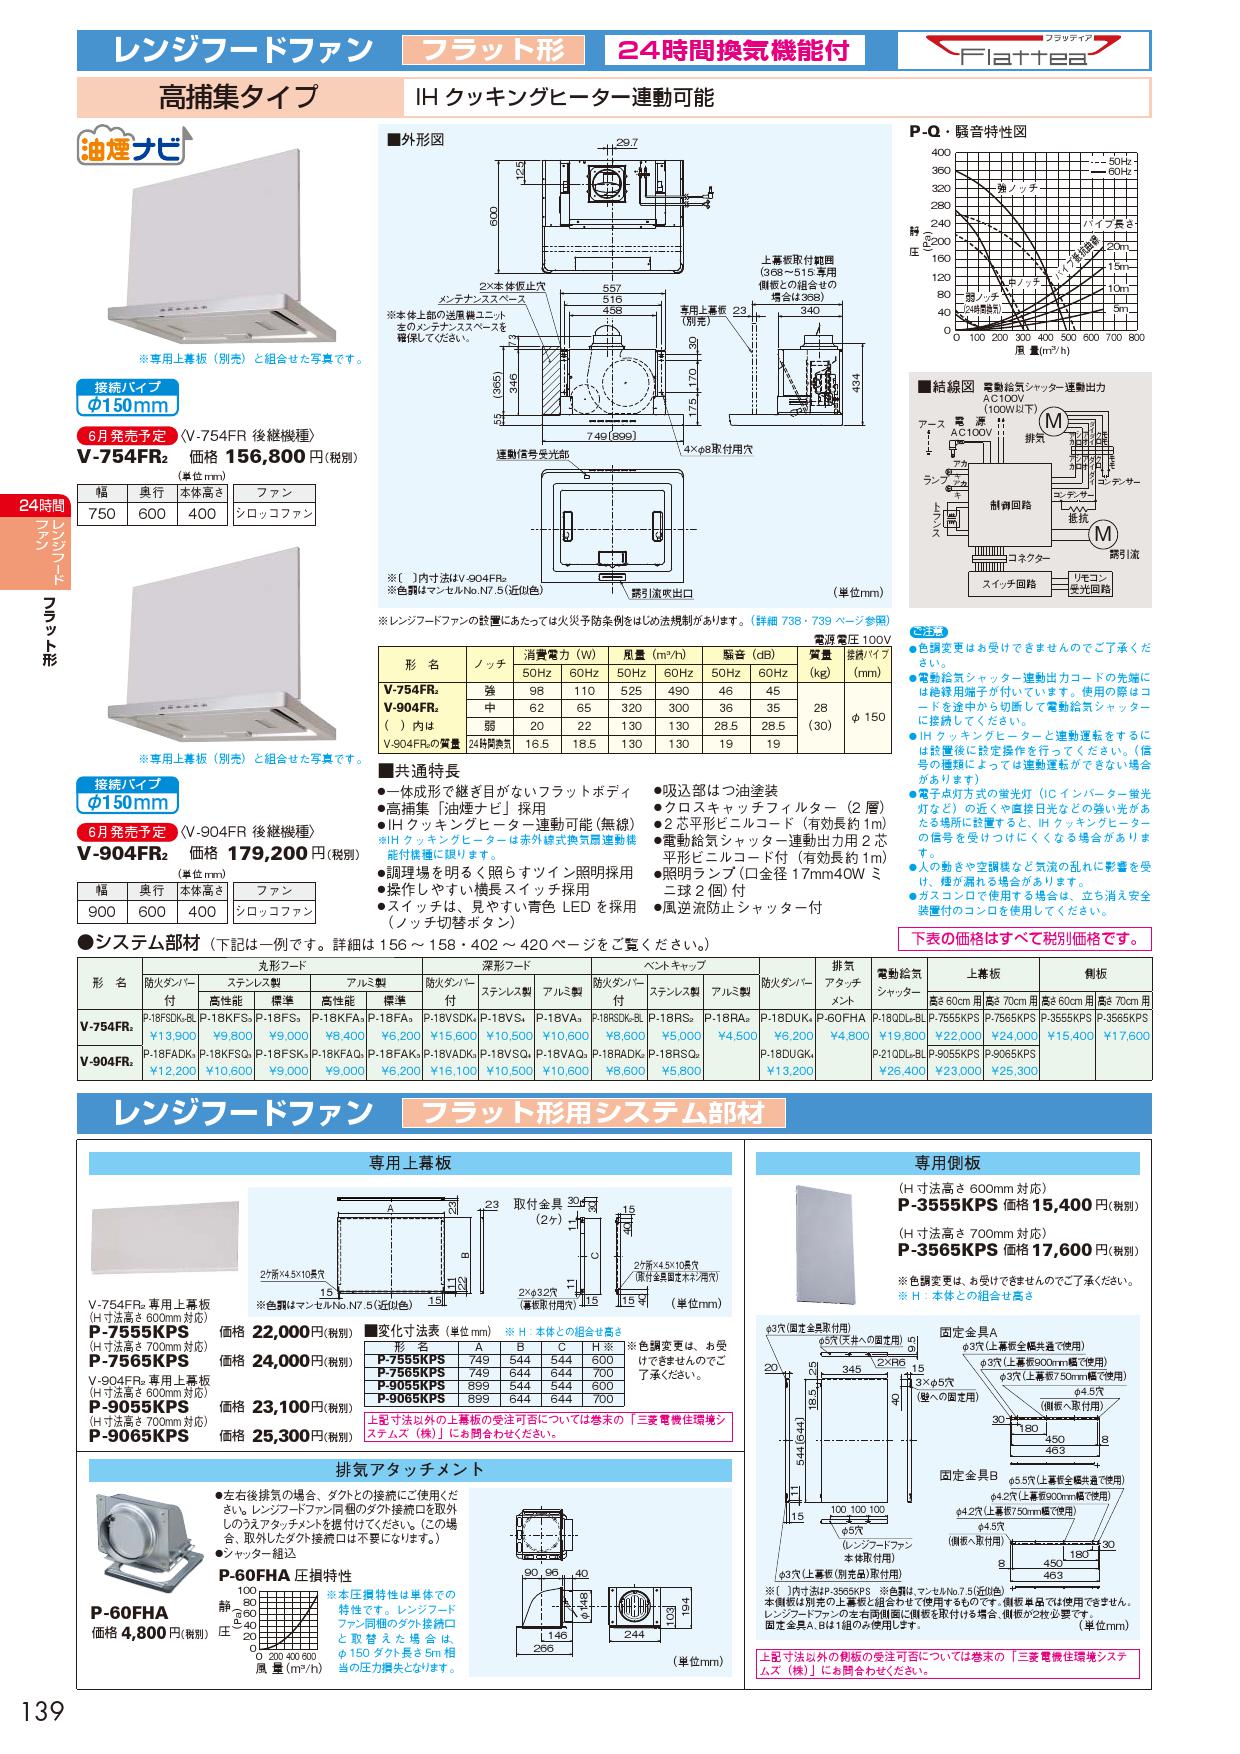 MITSUBISHI V-317K7 レンジフードファン (浅形・標準タイプ) - 3